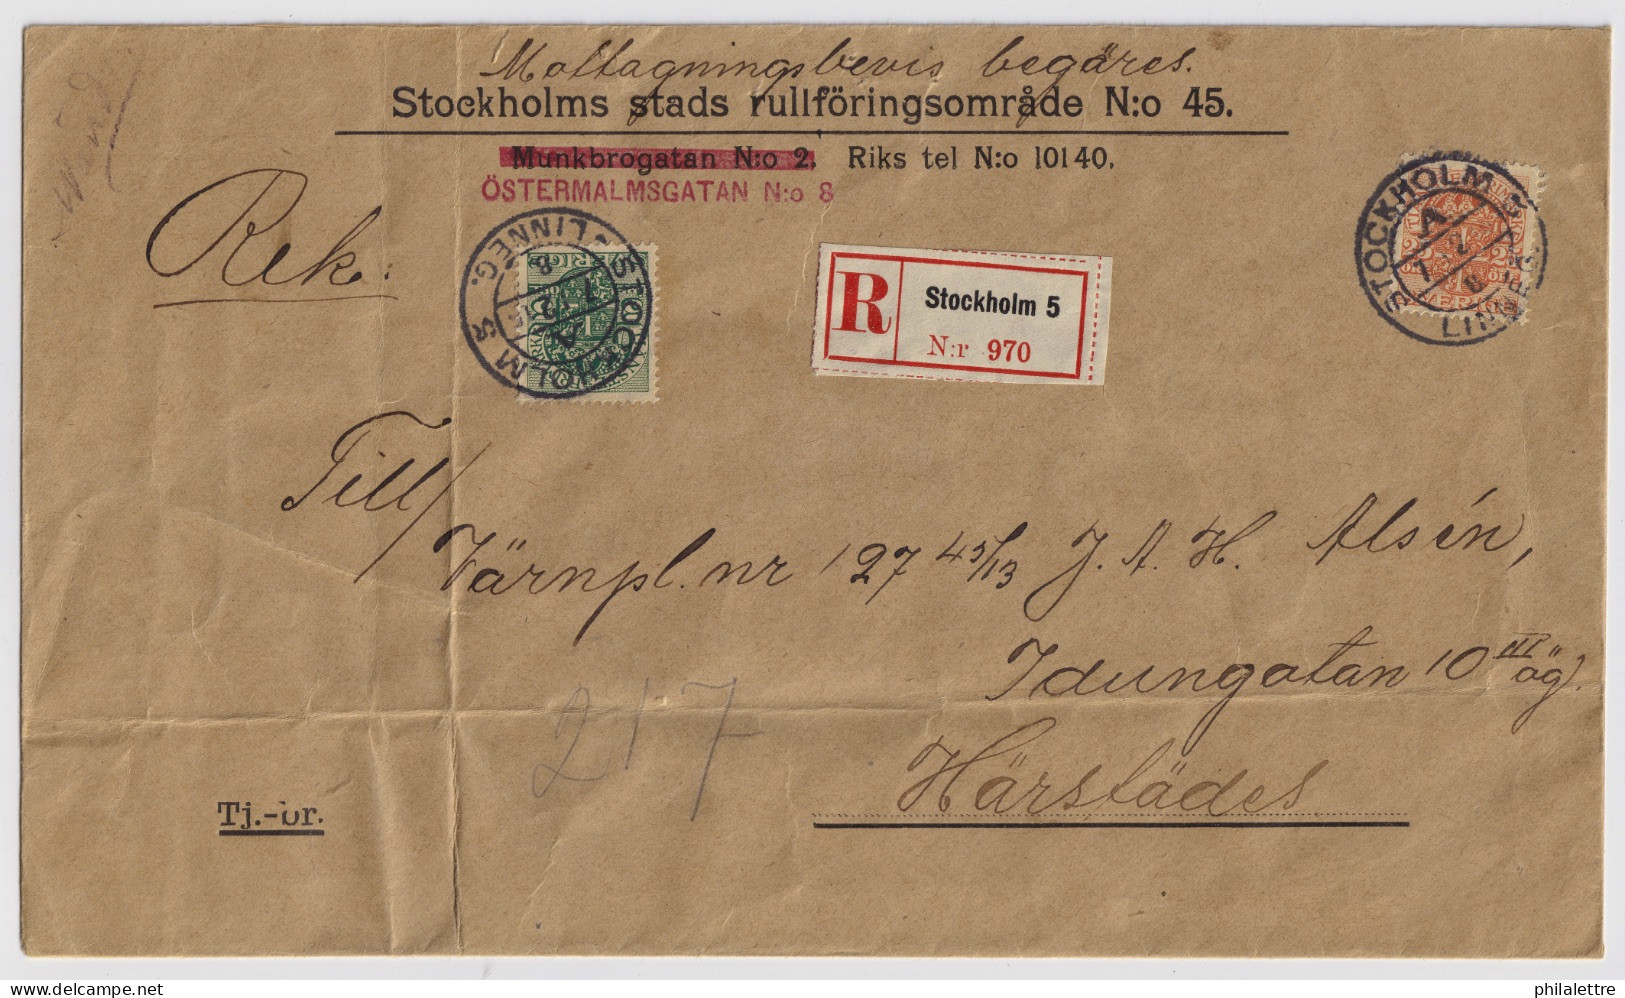 SWEDEN - 1915 ( Dec 7) - Facit TJ44 & TJ51on Official Registered Cover Sent Locally In Stockholm - Servizio